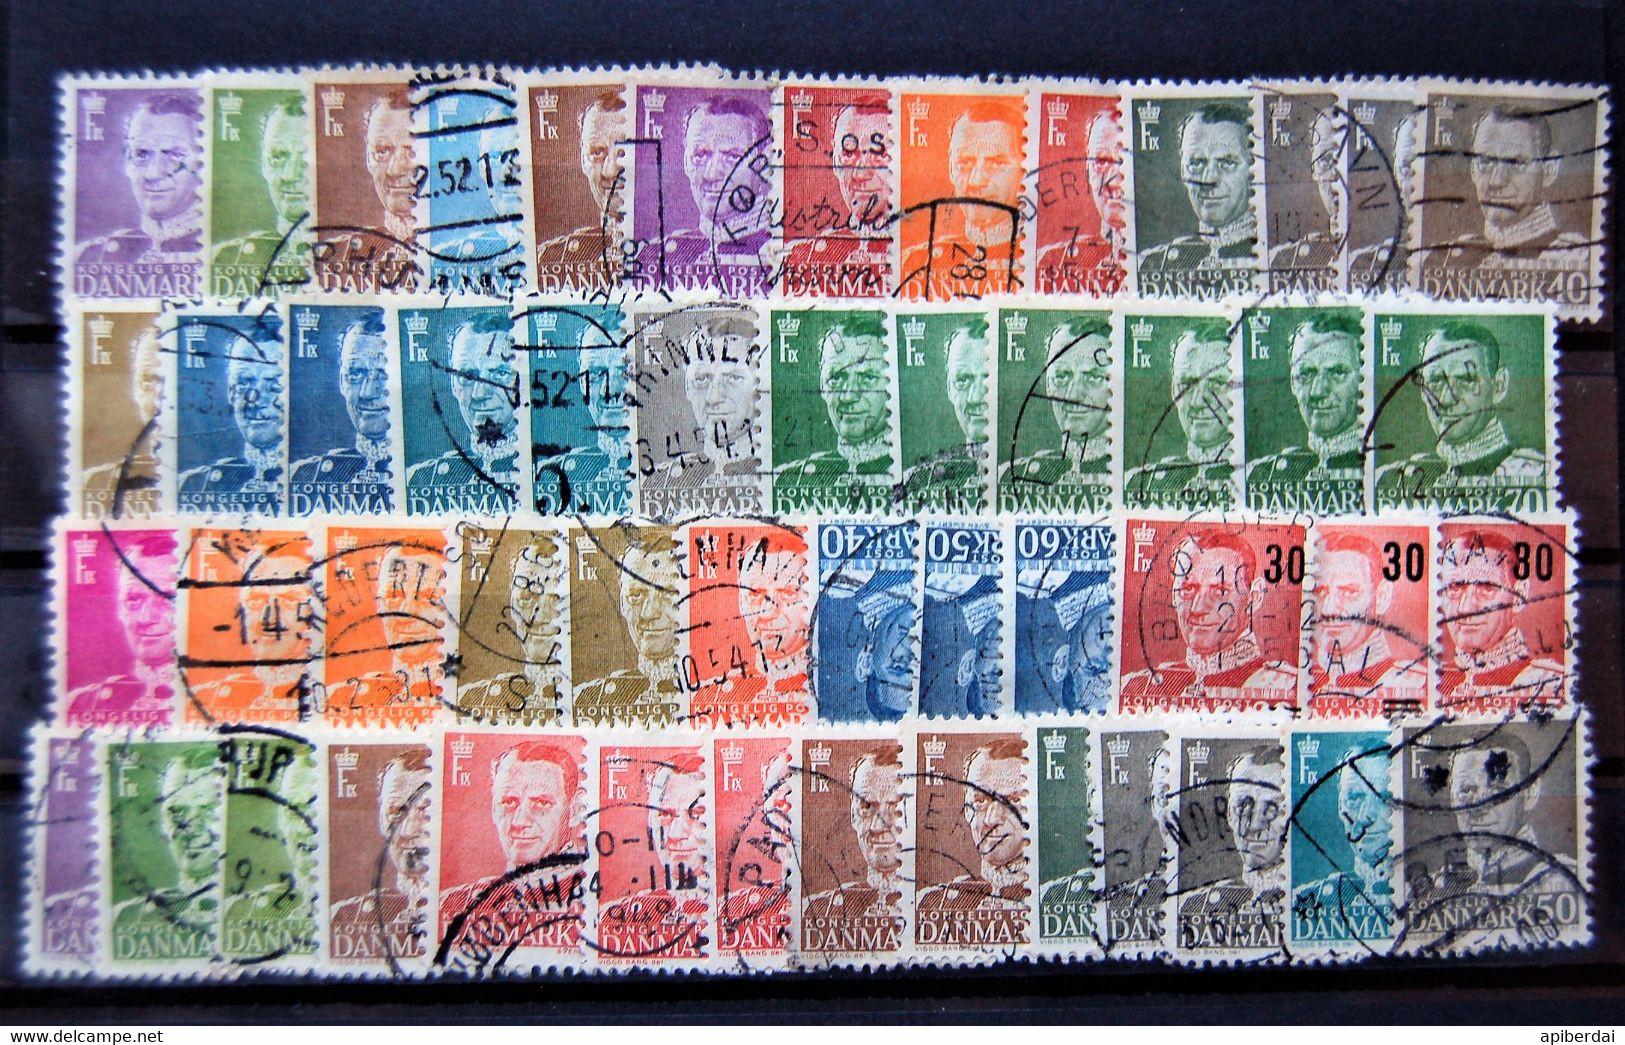 Danemark Danmark - 50 Stamps Frederik IX Used - Gebruikt